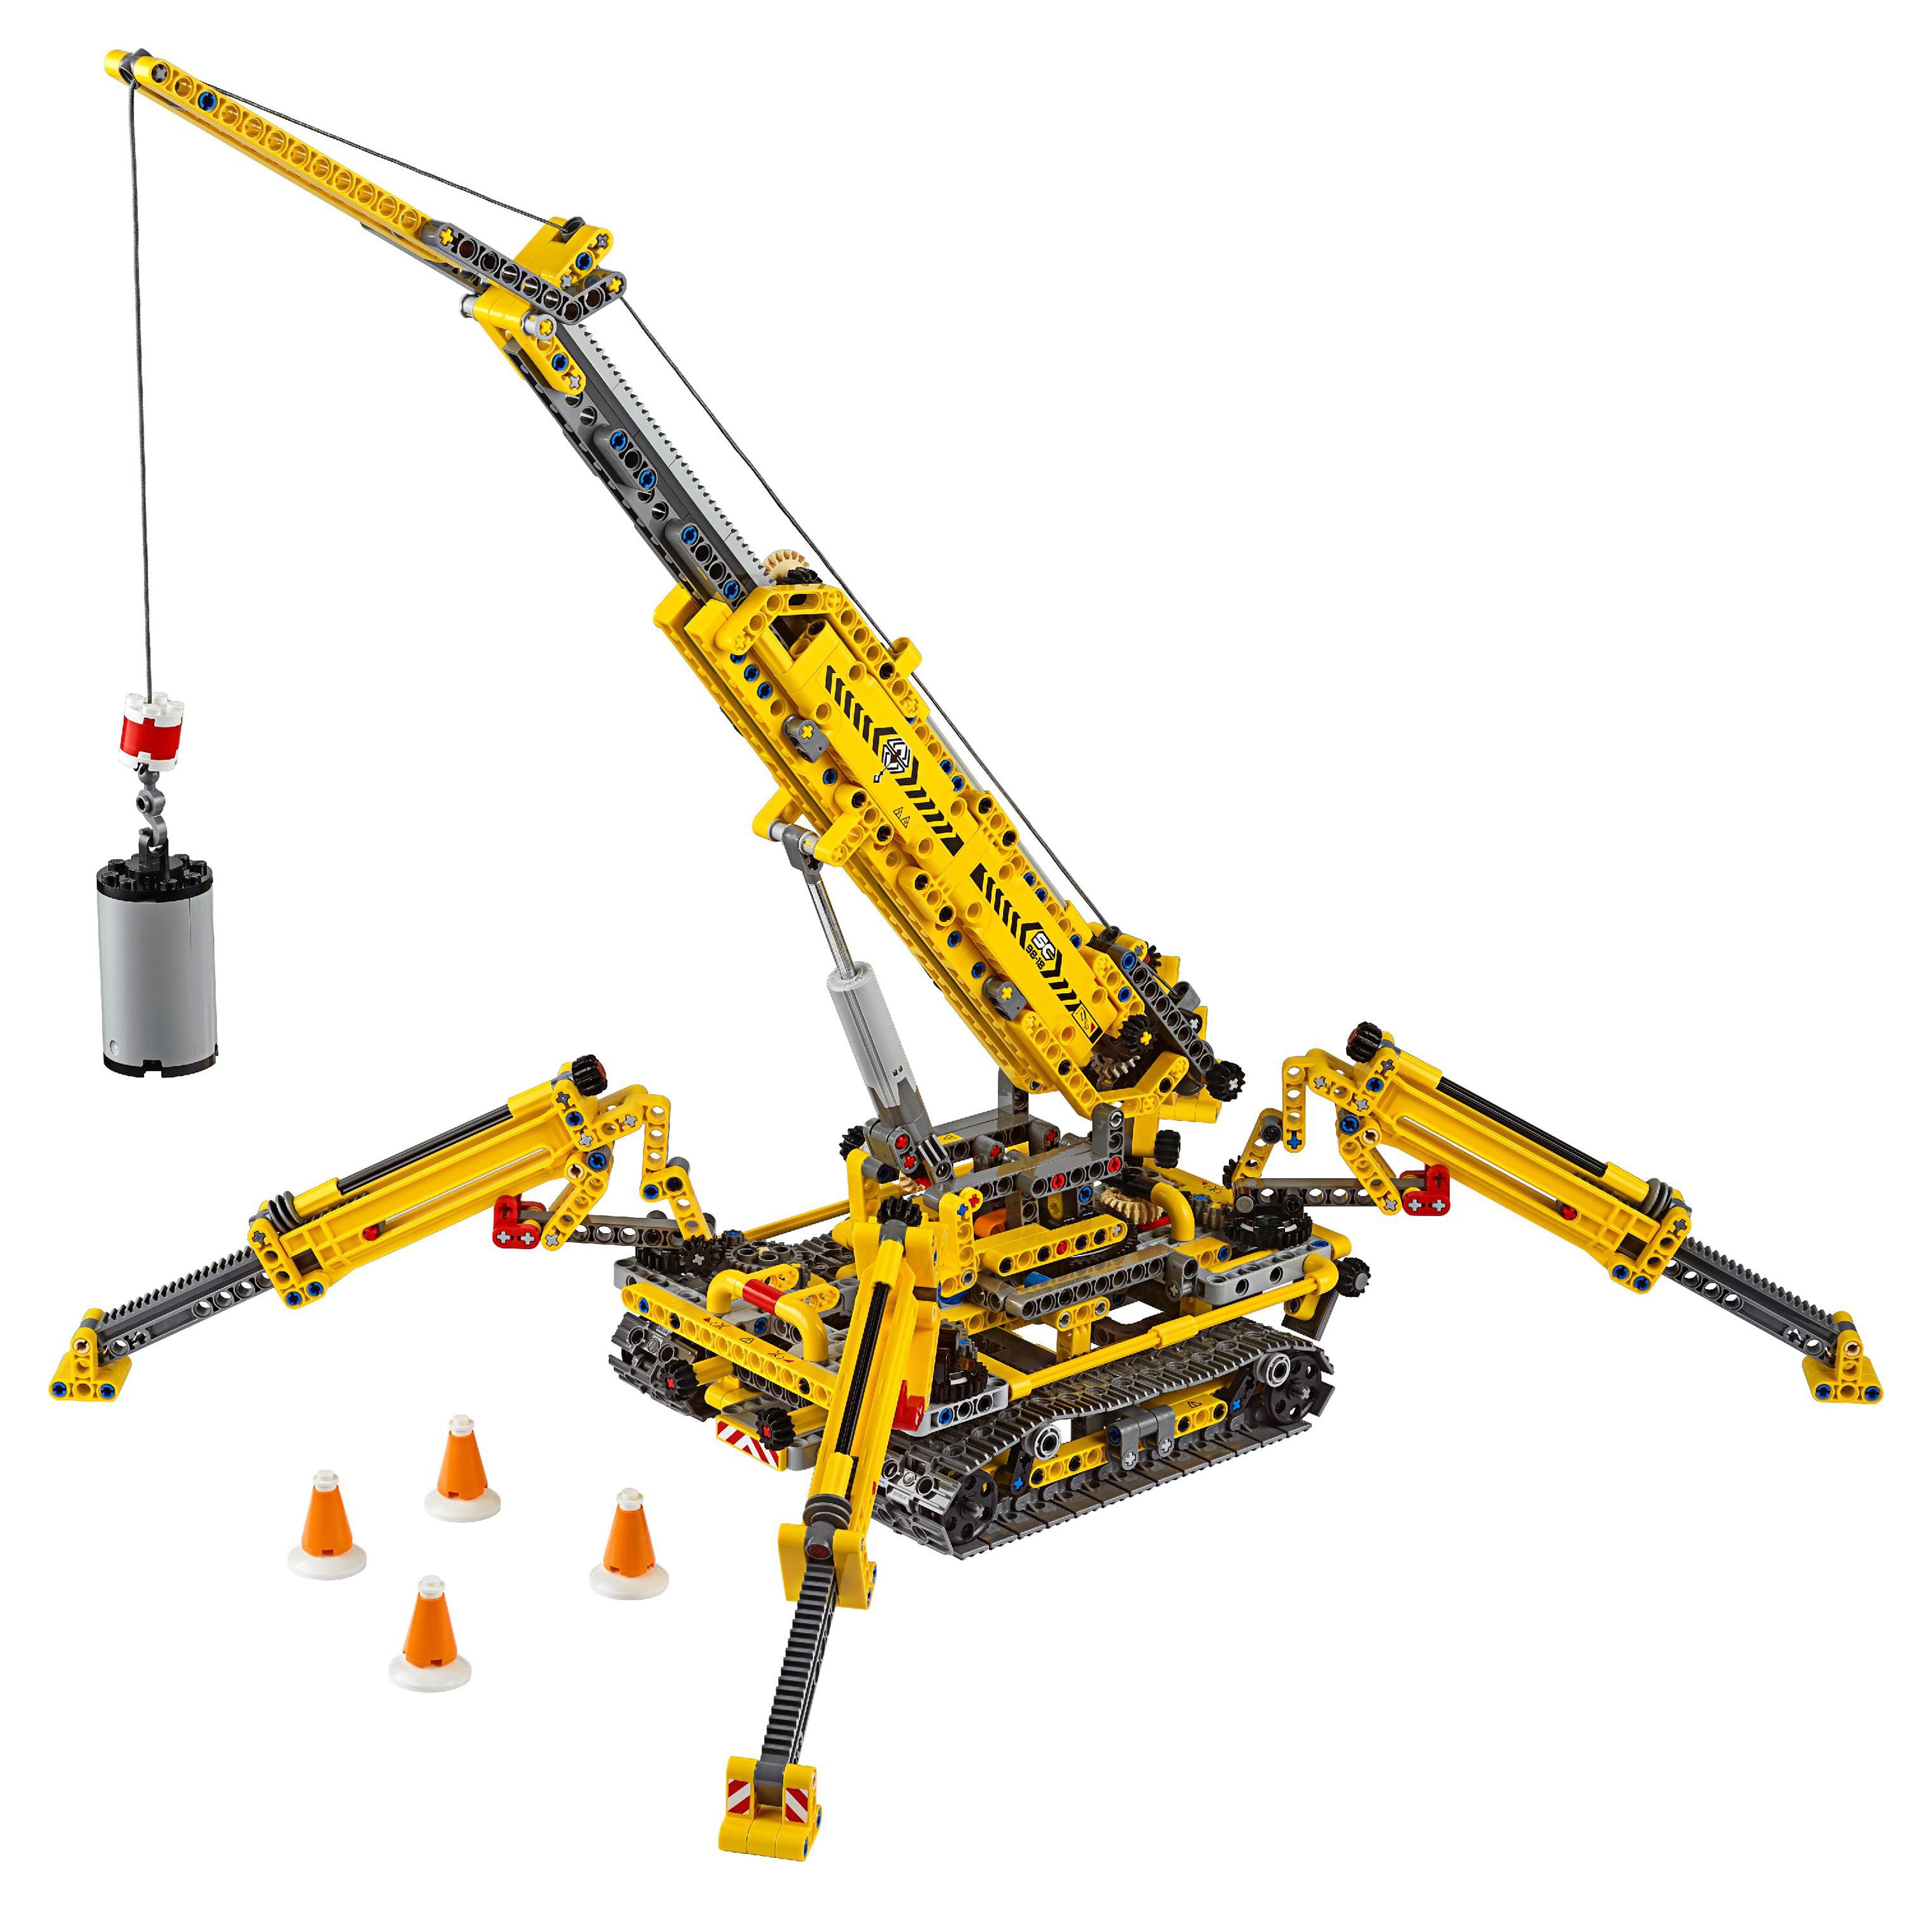 LEGO Technic Compact Crawler Crane 42097 Construction Model Crane Set (920 Pieces) - image 3 of 8